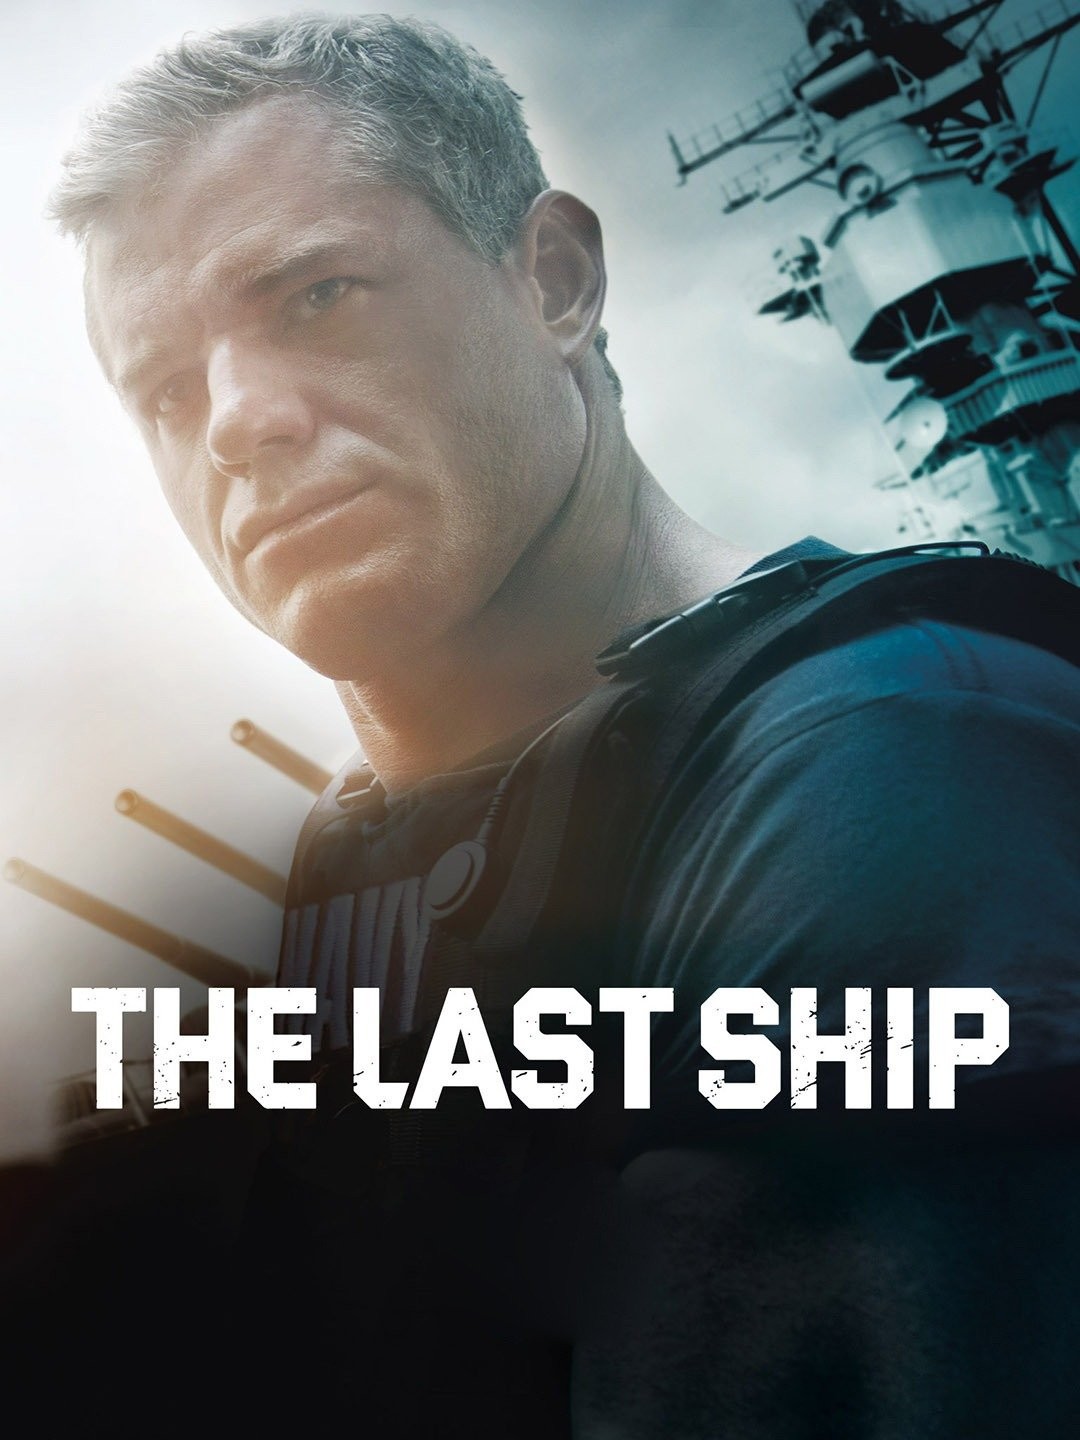 The Last Ship - IGN